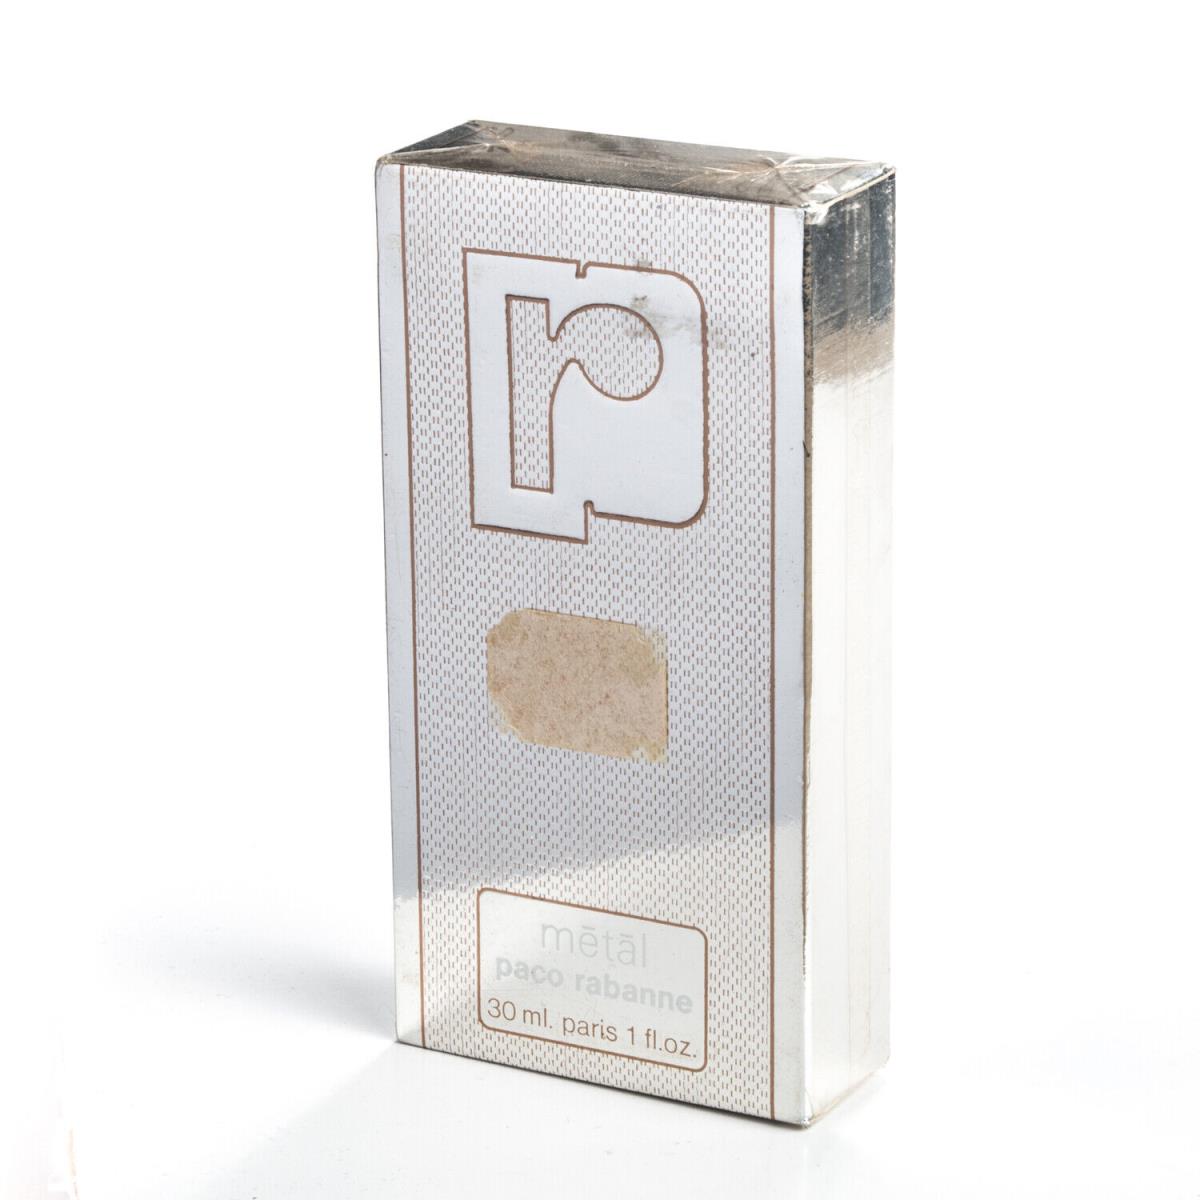 Paco Rabanne Metal Parfum 1OZ 30ml Splash Perfume Extrait Vintage Box